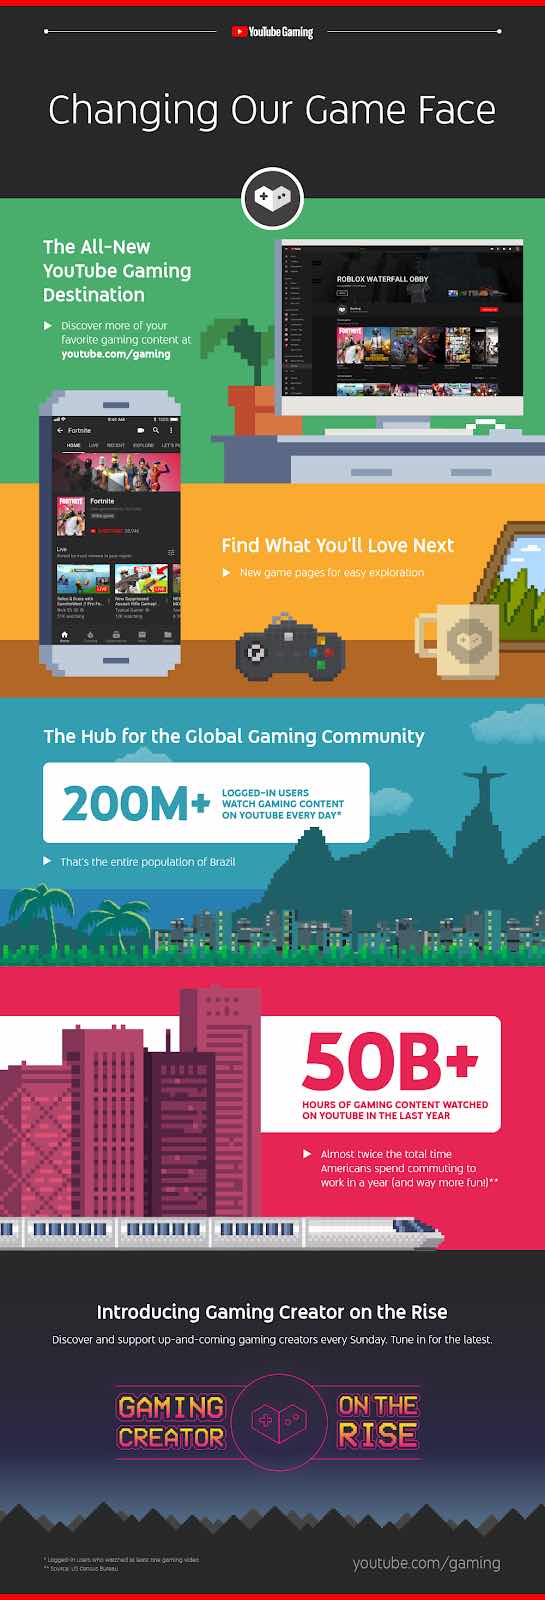 YT Gaming Infographic 17Sept EN US copy